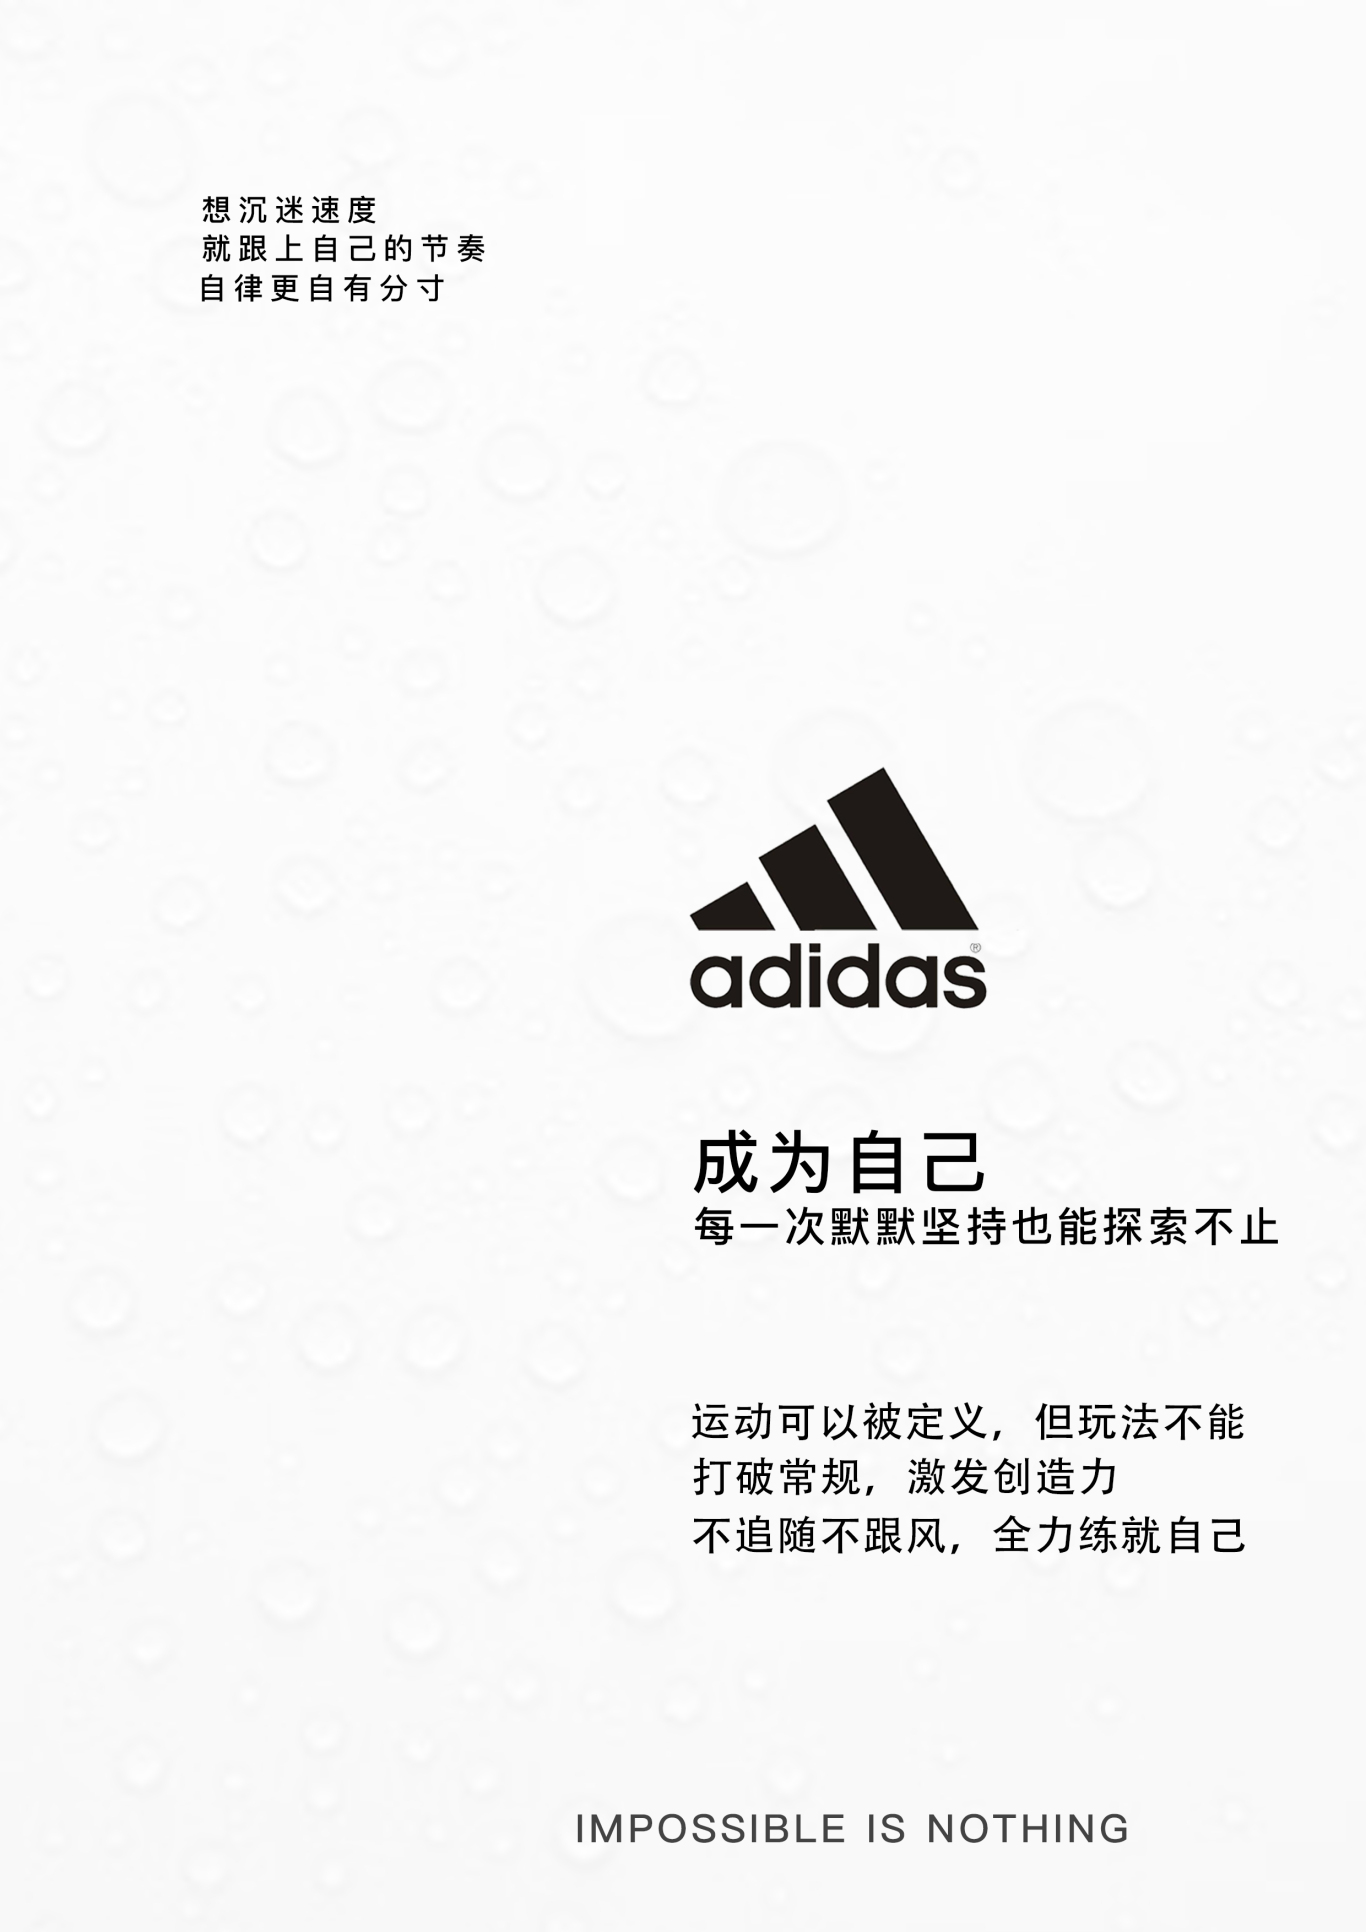 adidas產品型錄設計圖1